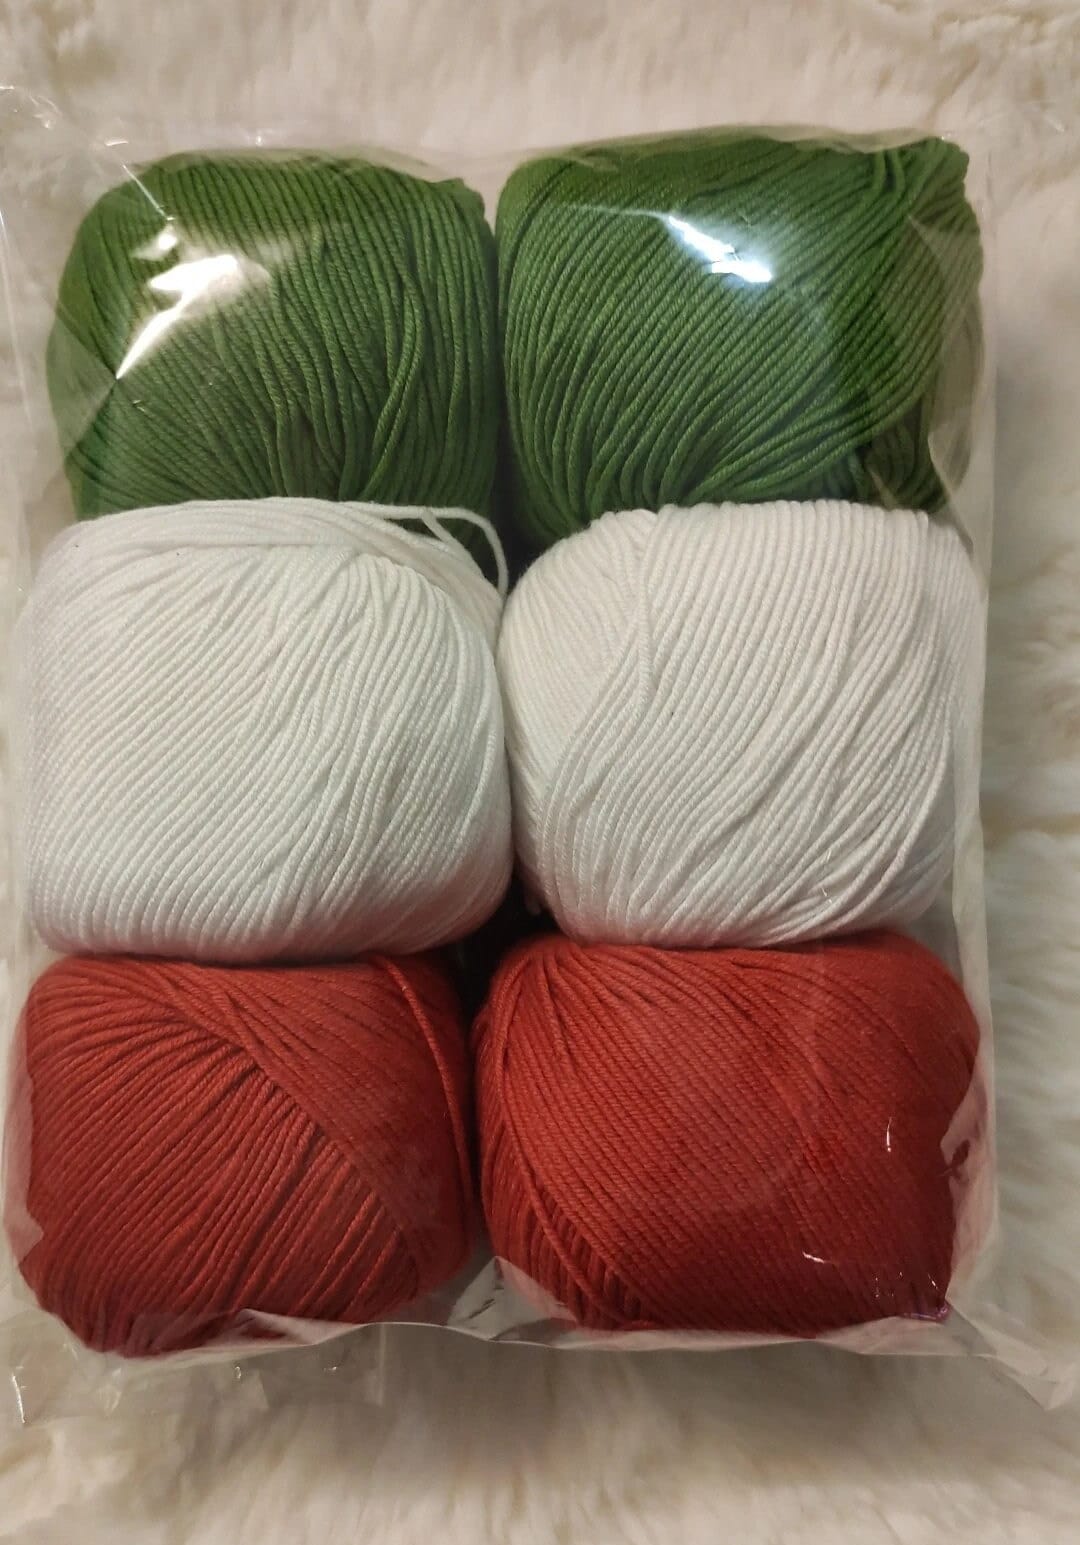 Multicolor Chunky Yarn, Soft Crochet Yarn, 100g Thick Yarn for Amigurumi  and Crafting, Hand Crochet Yarn, Colorful Velvet Yarn, Bulky Yarn 